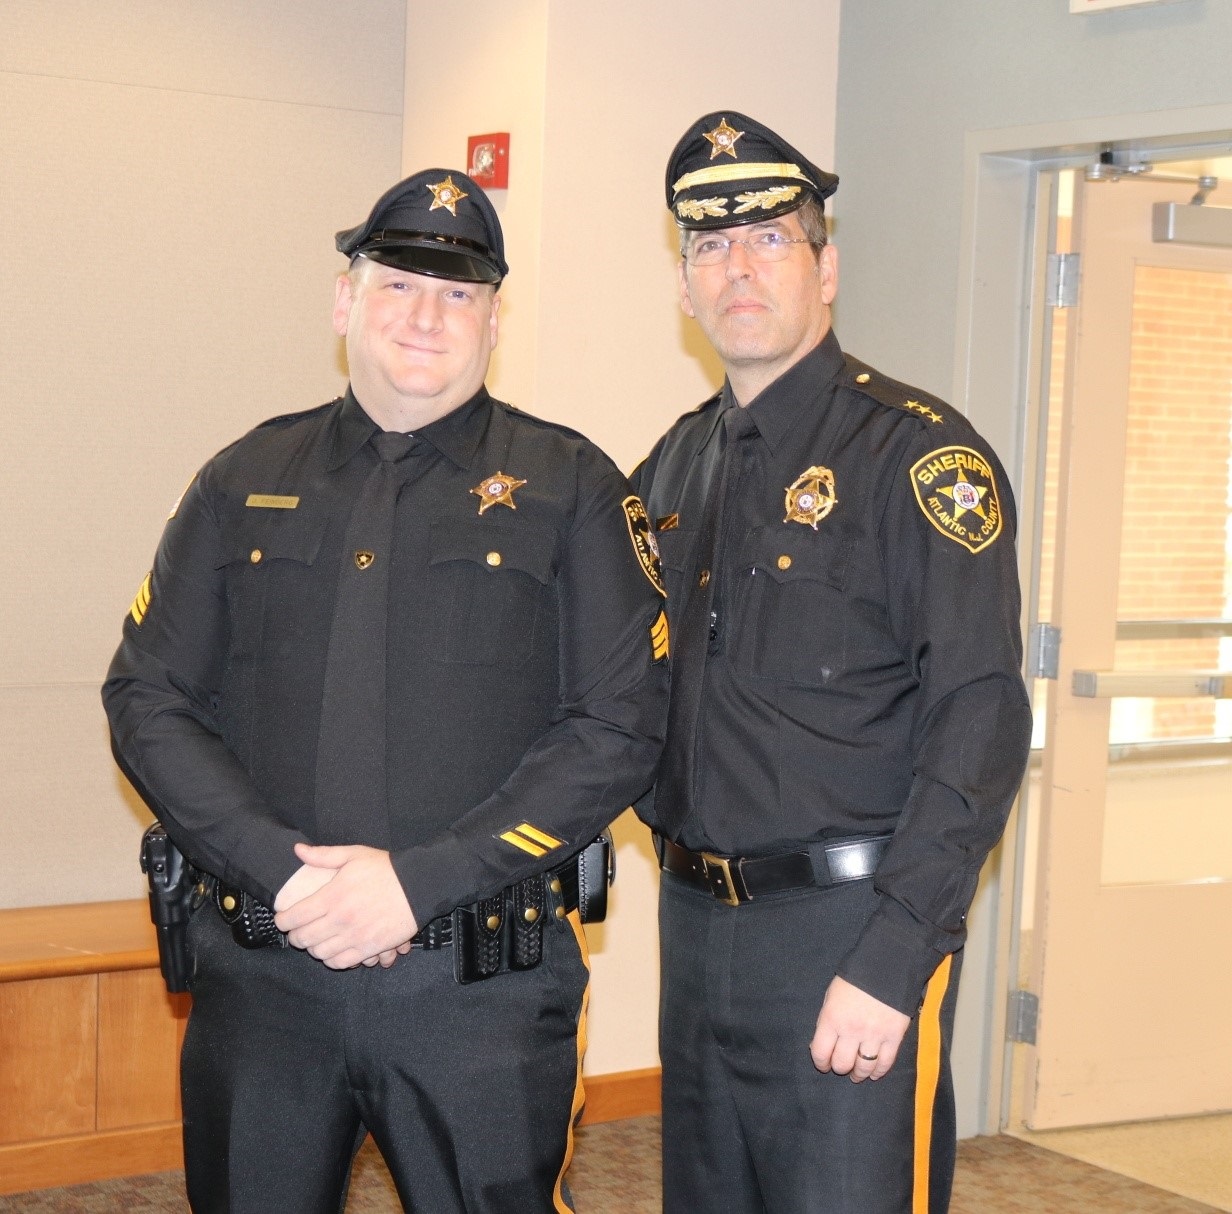 Atlantic County Sheriff promotes two employees DOWNBEACH